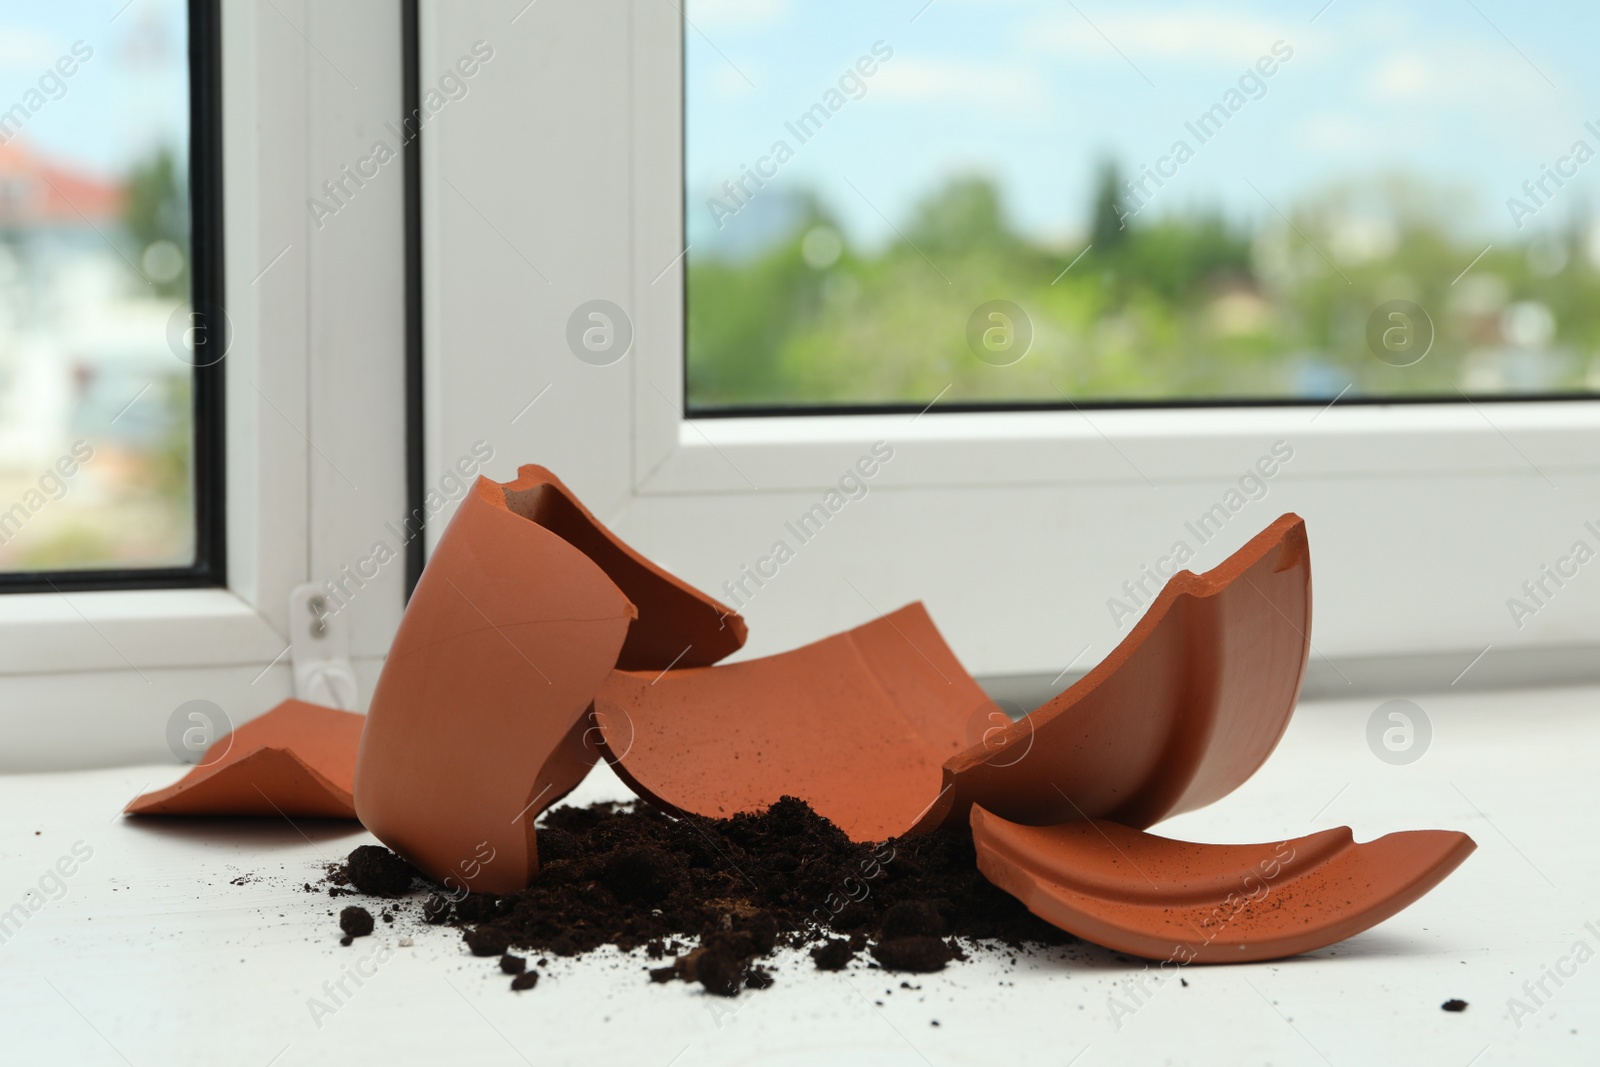 Photo of Broken terracotta flower pot with soil on white windowsill indoors